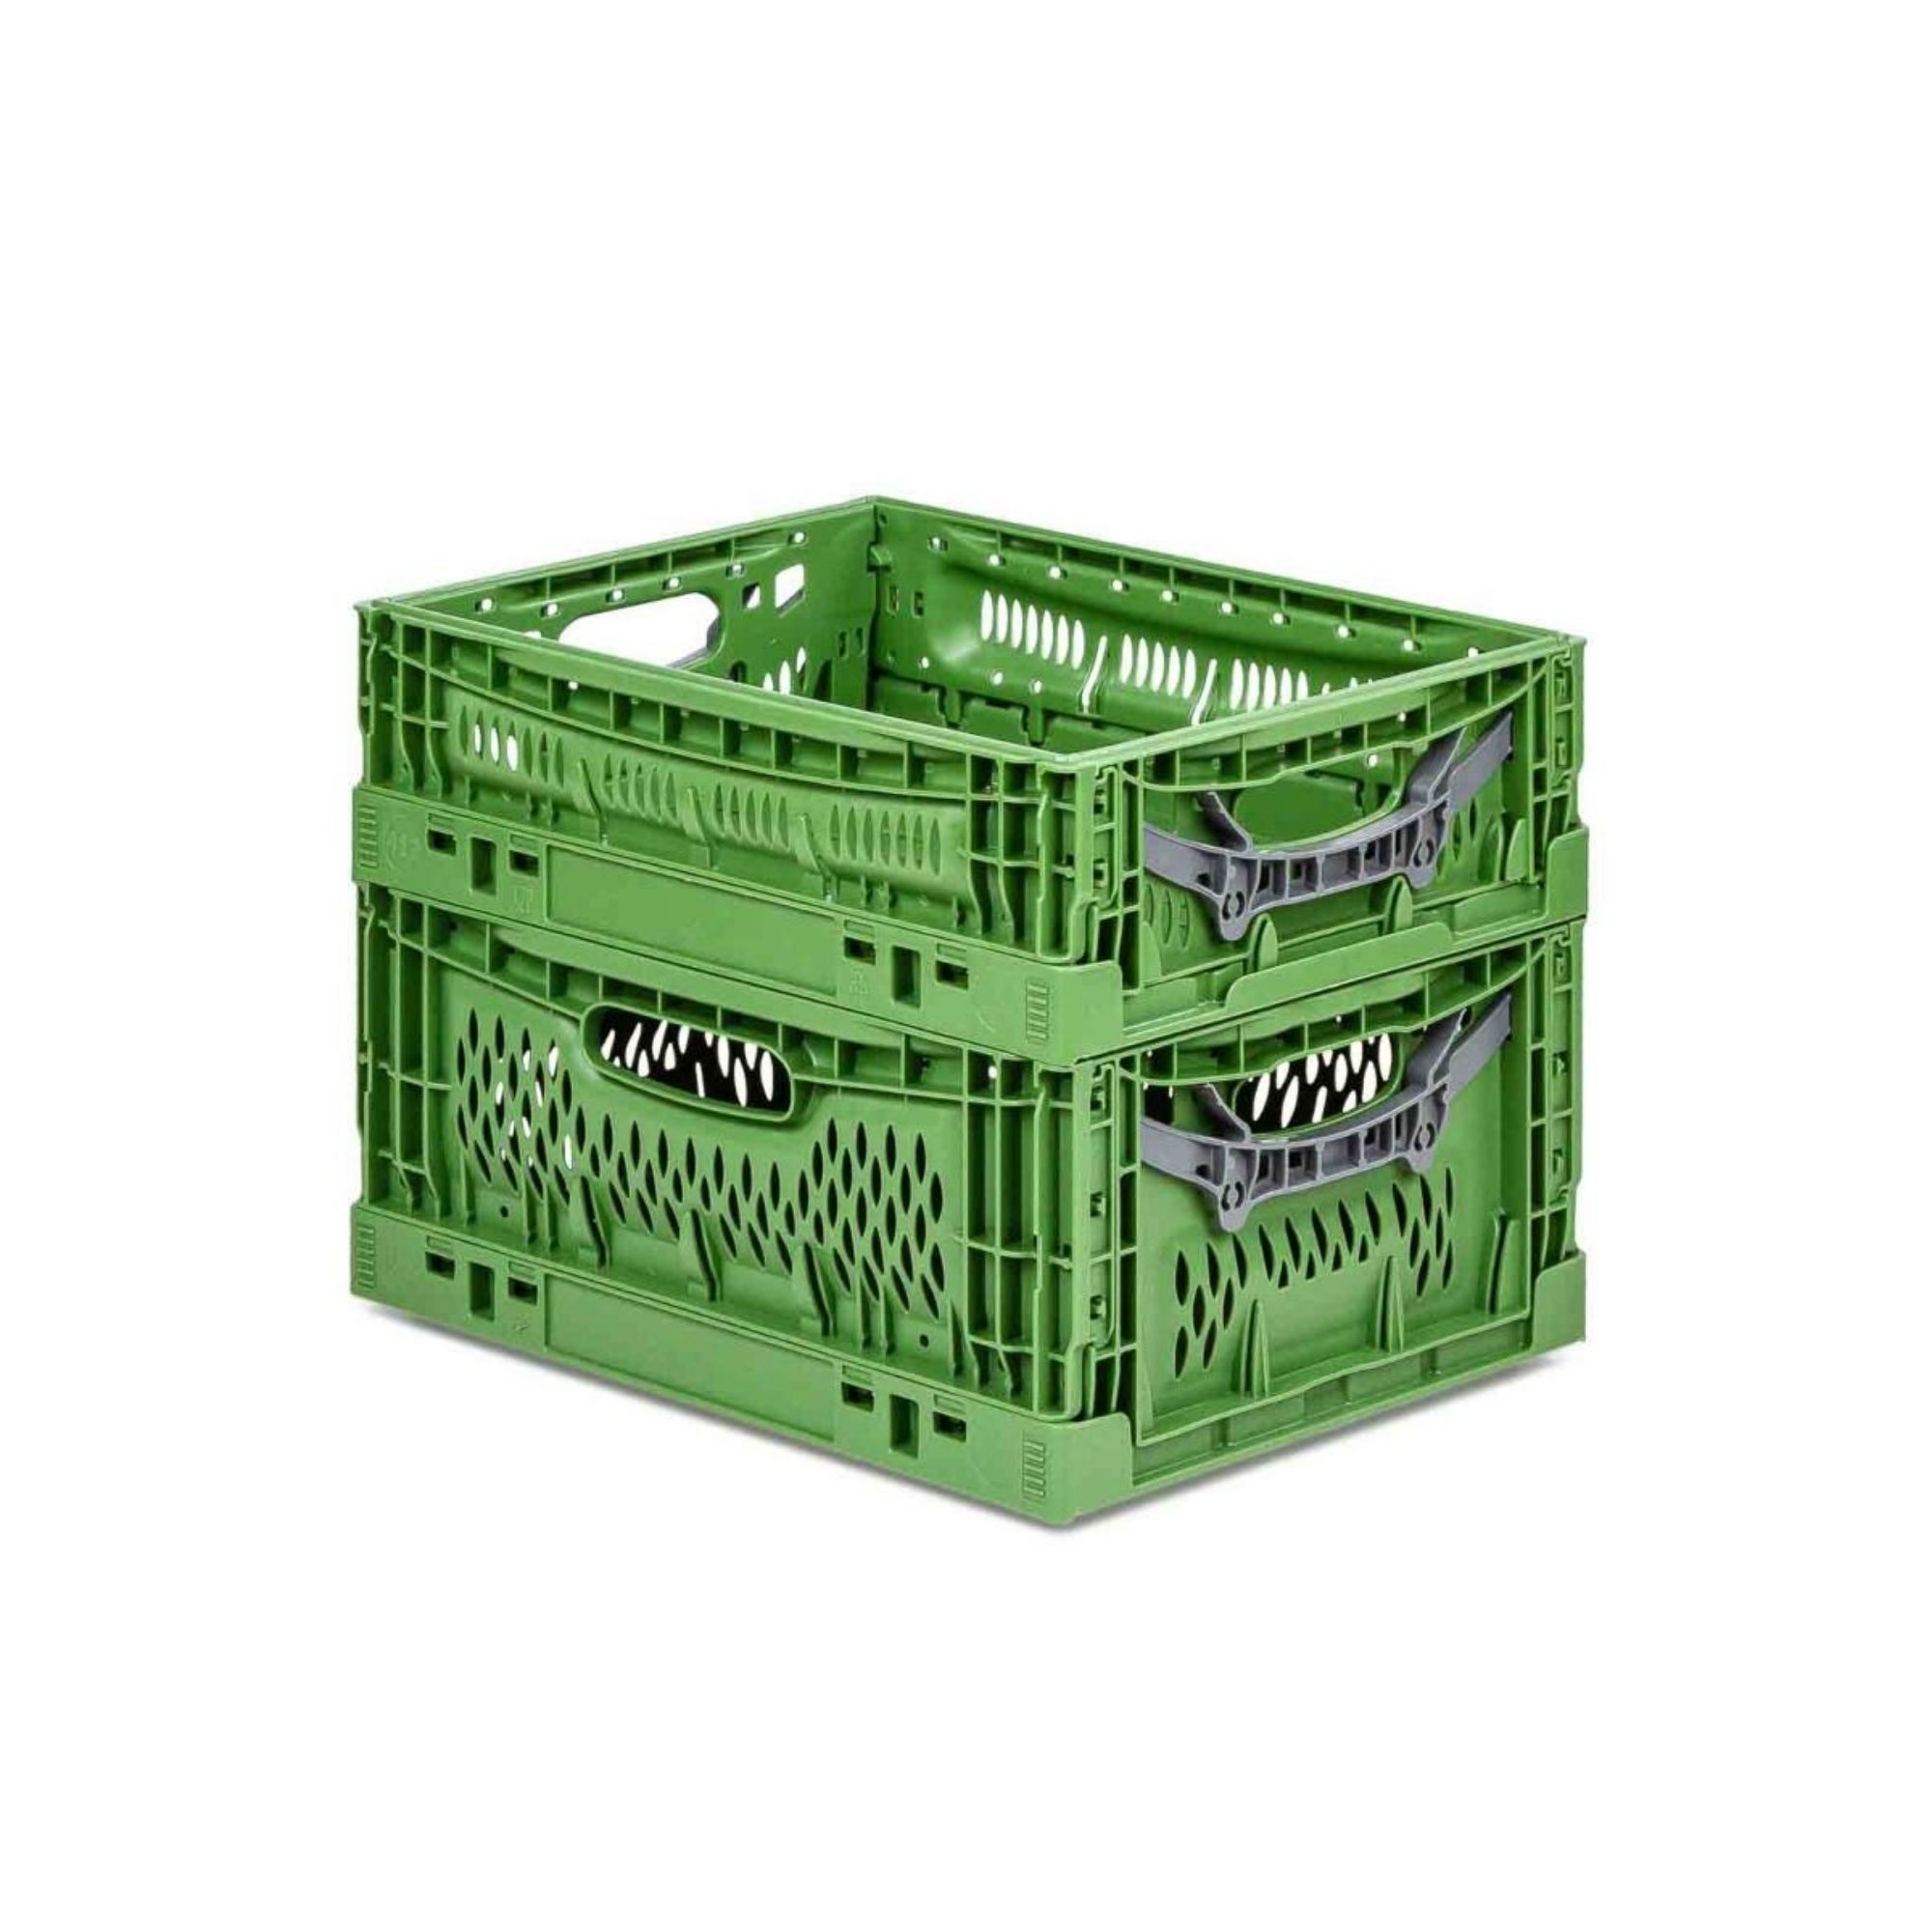 SuperSparSet 10x Stabile Profi-Klappbox Chameleon in Industriequalität | HxBxT 18x30x40cm | 17 Liter | klappbar stapelbar durchbrochen lebensmittelecht | Eurobox Eurobehälter Transportbehälter Stapelbehlter Faltbox